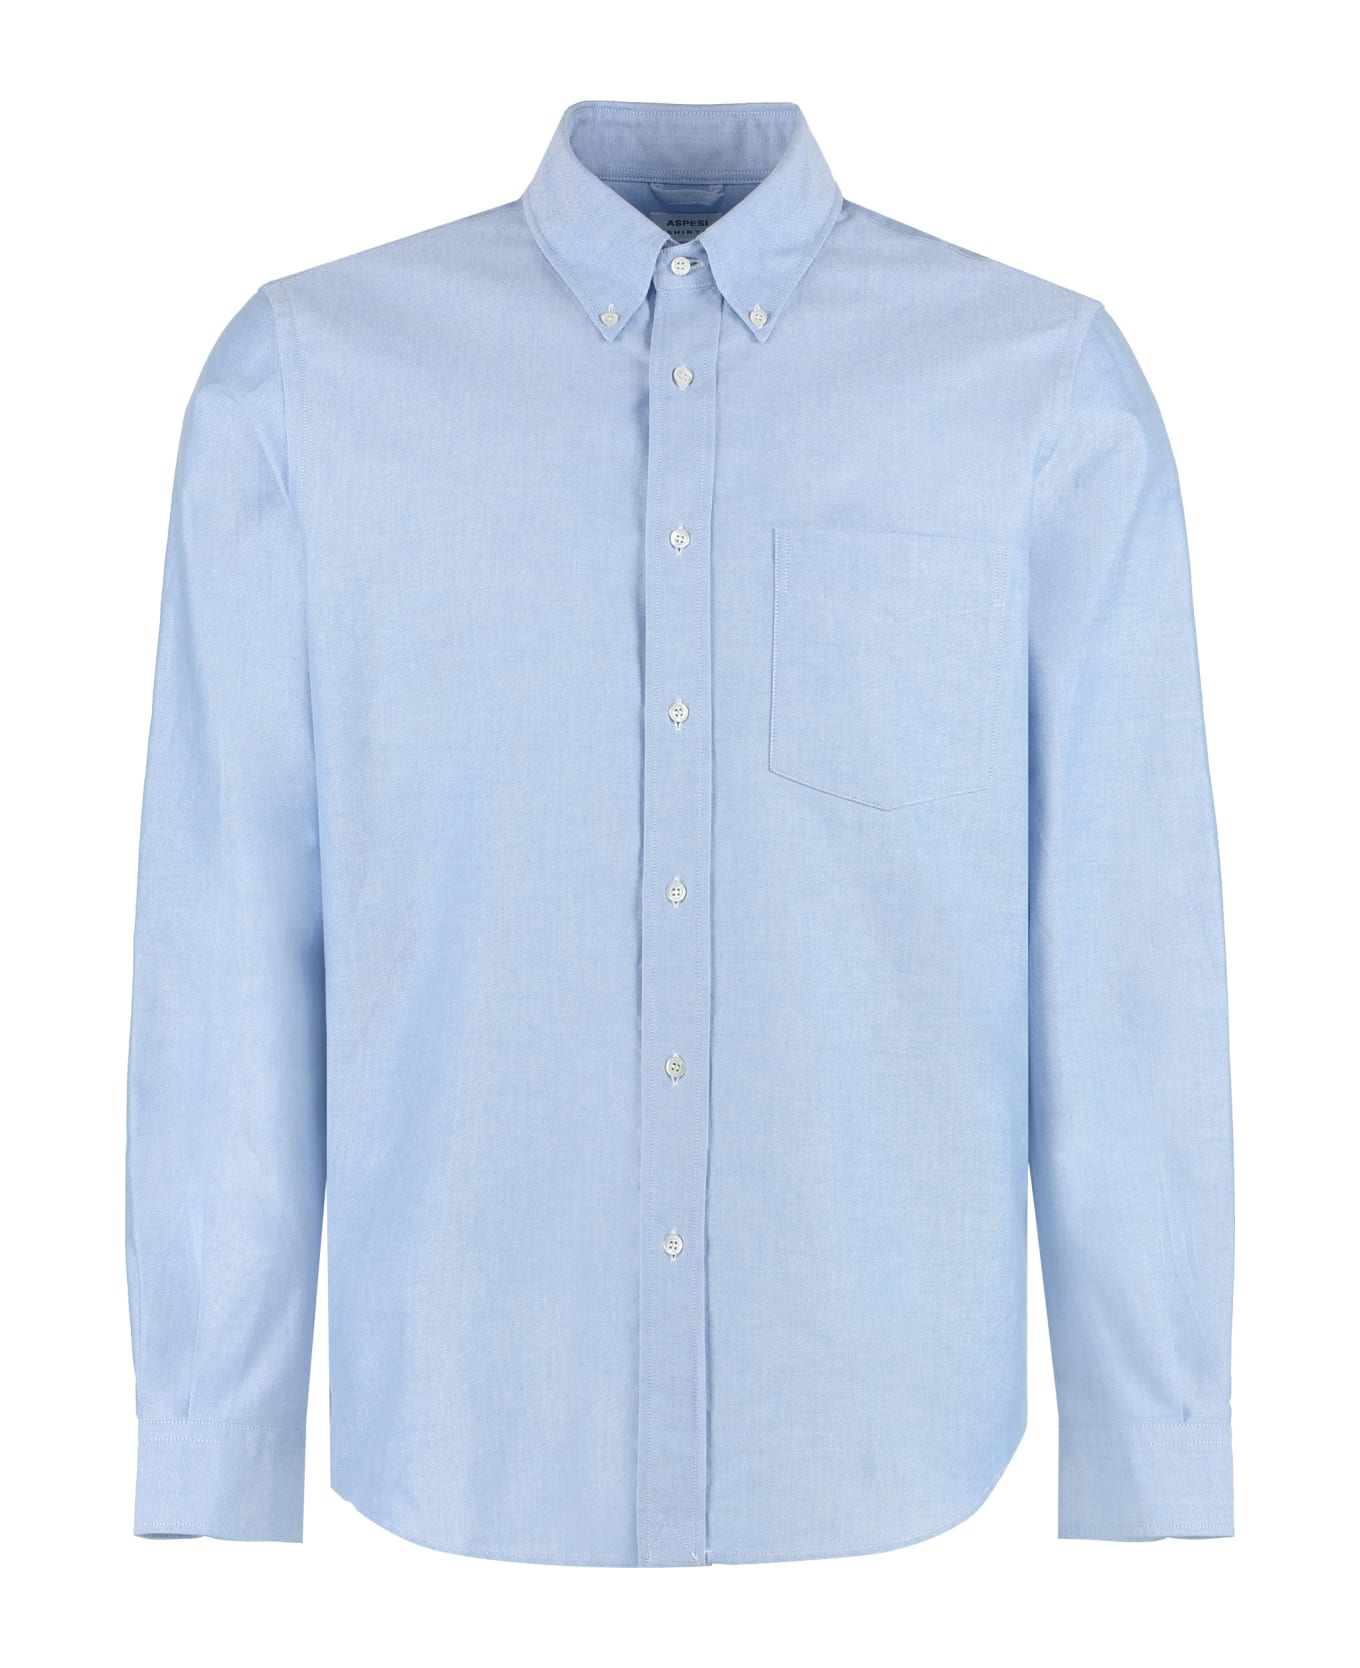 Aspesi Cotton Poplin Shirt - Light Blue